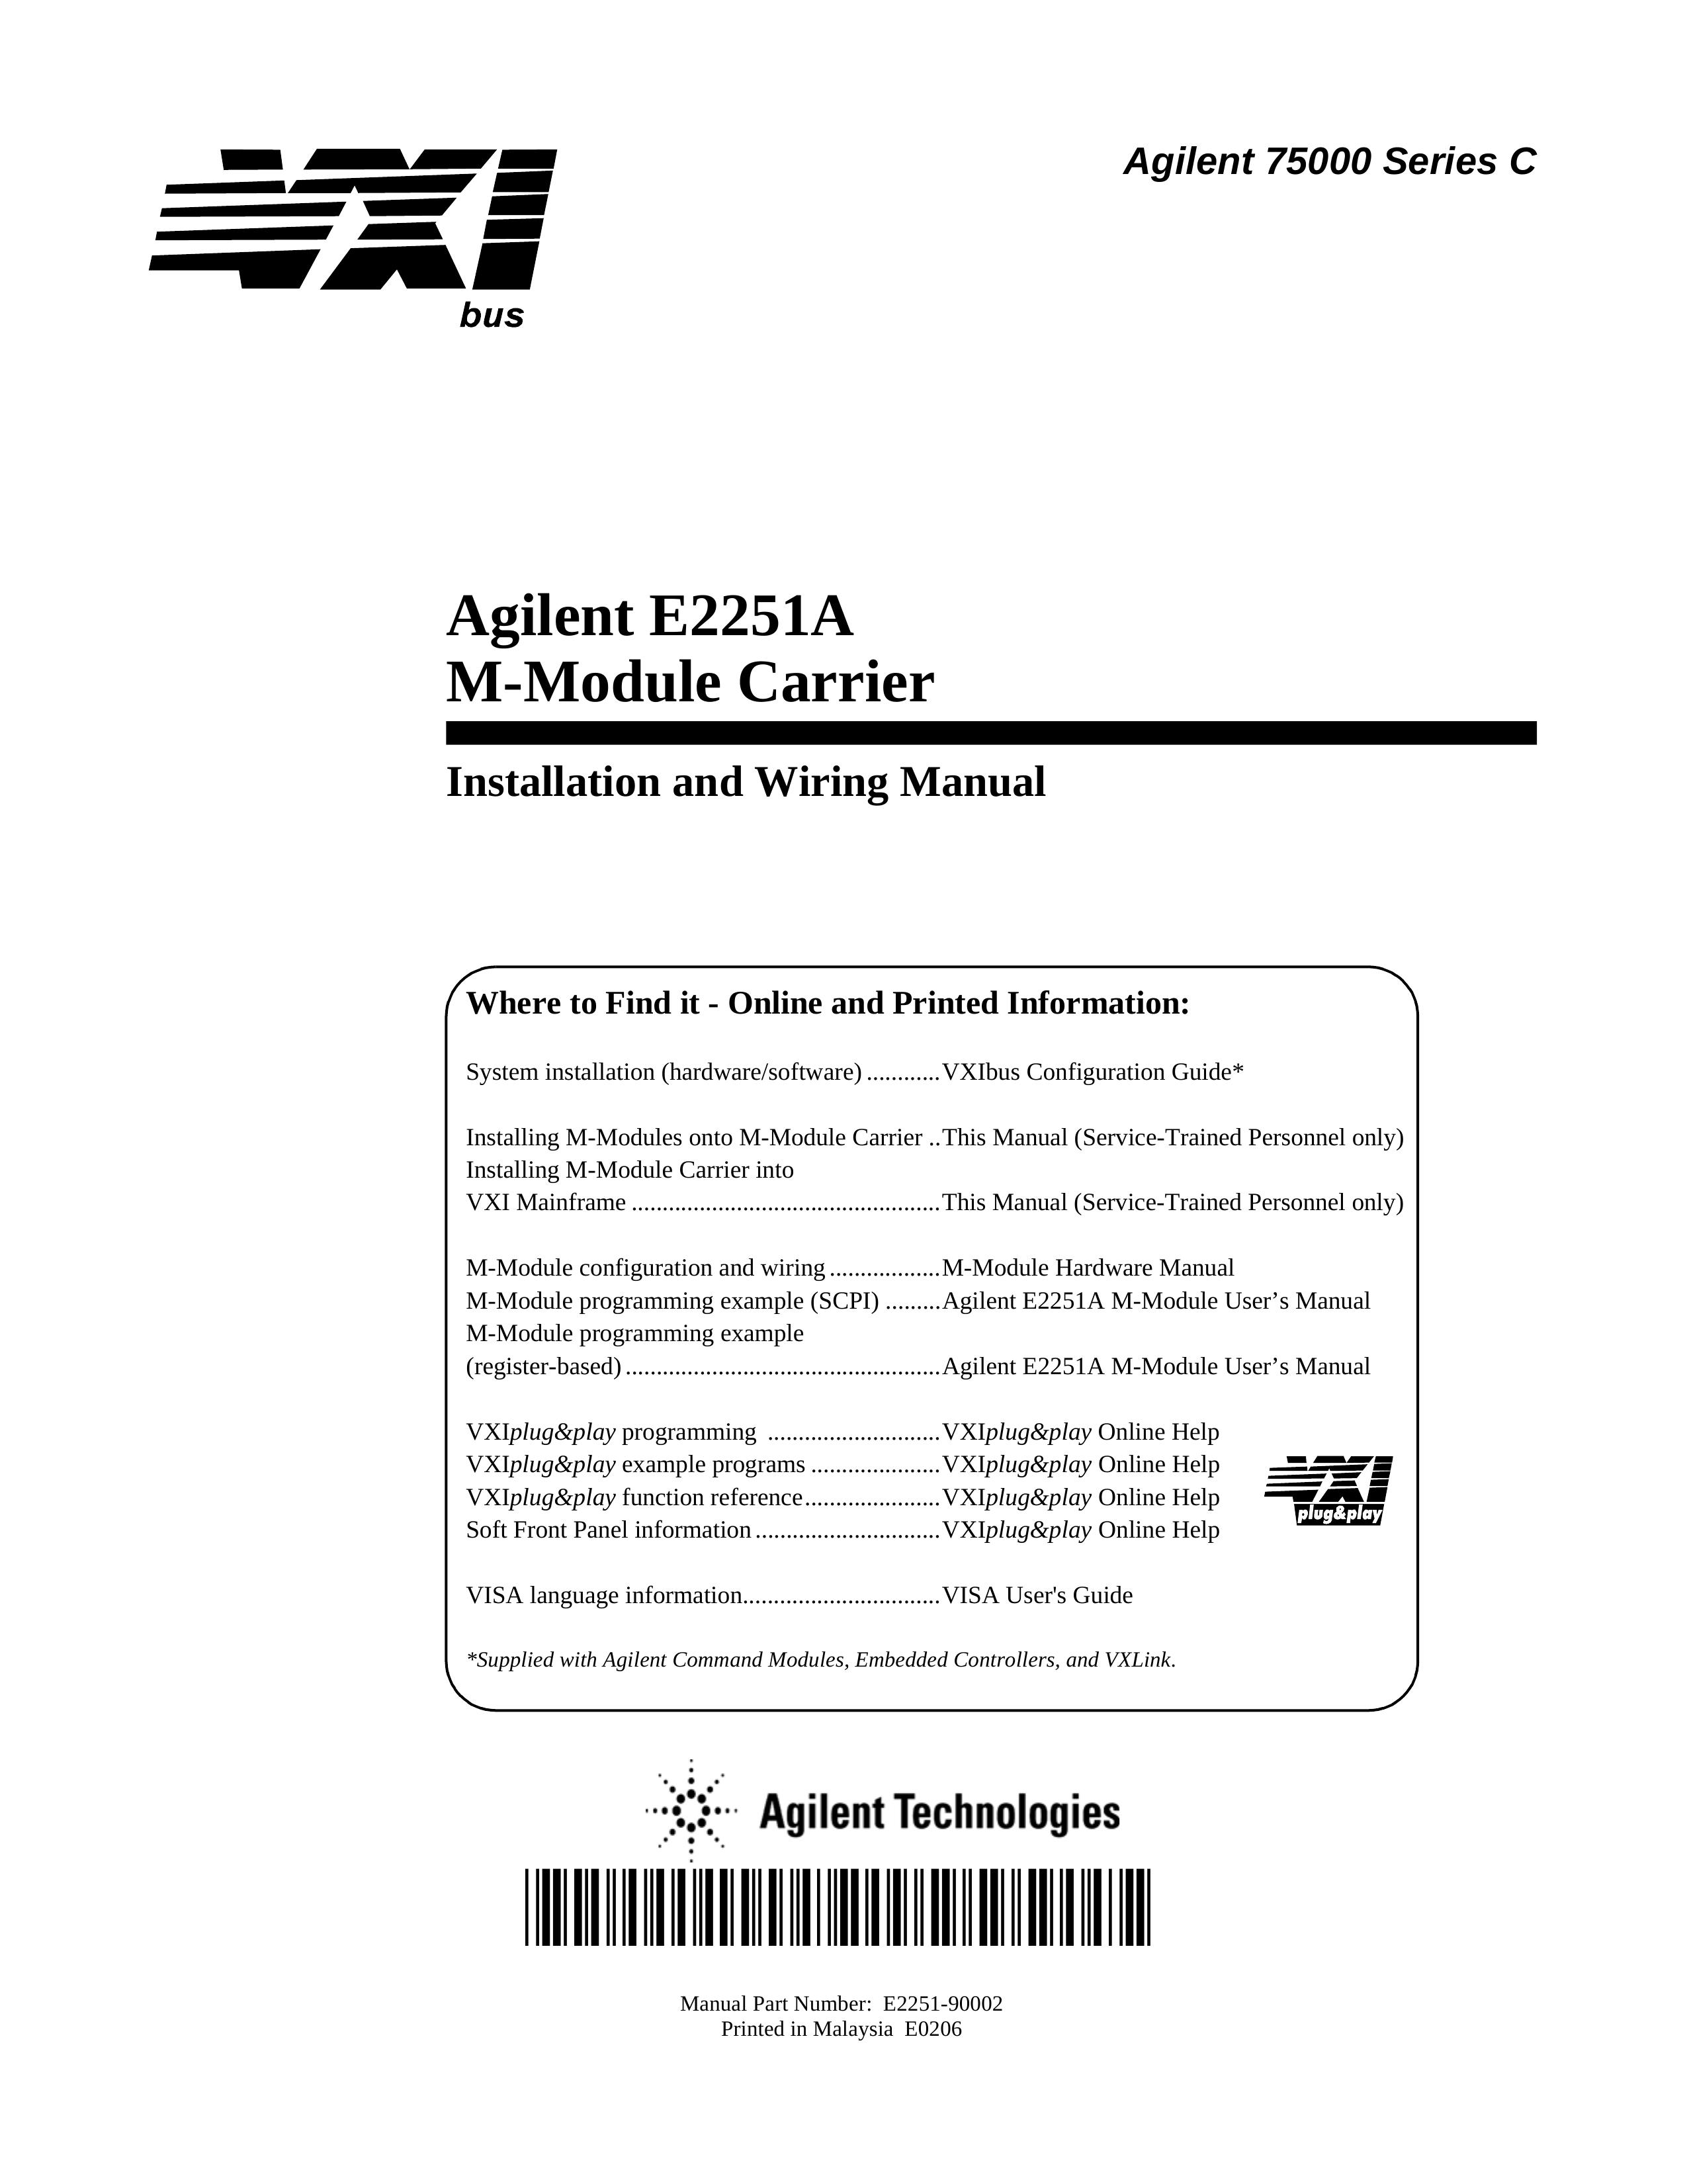 Agilent Technologies E2251A Drums User Manual